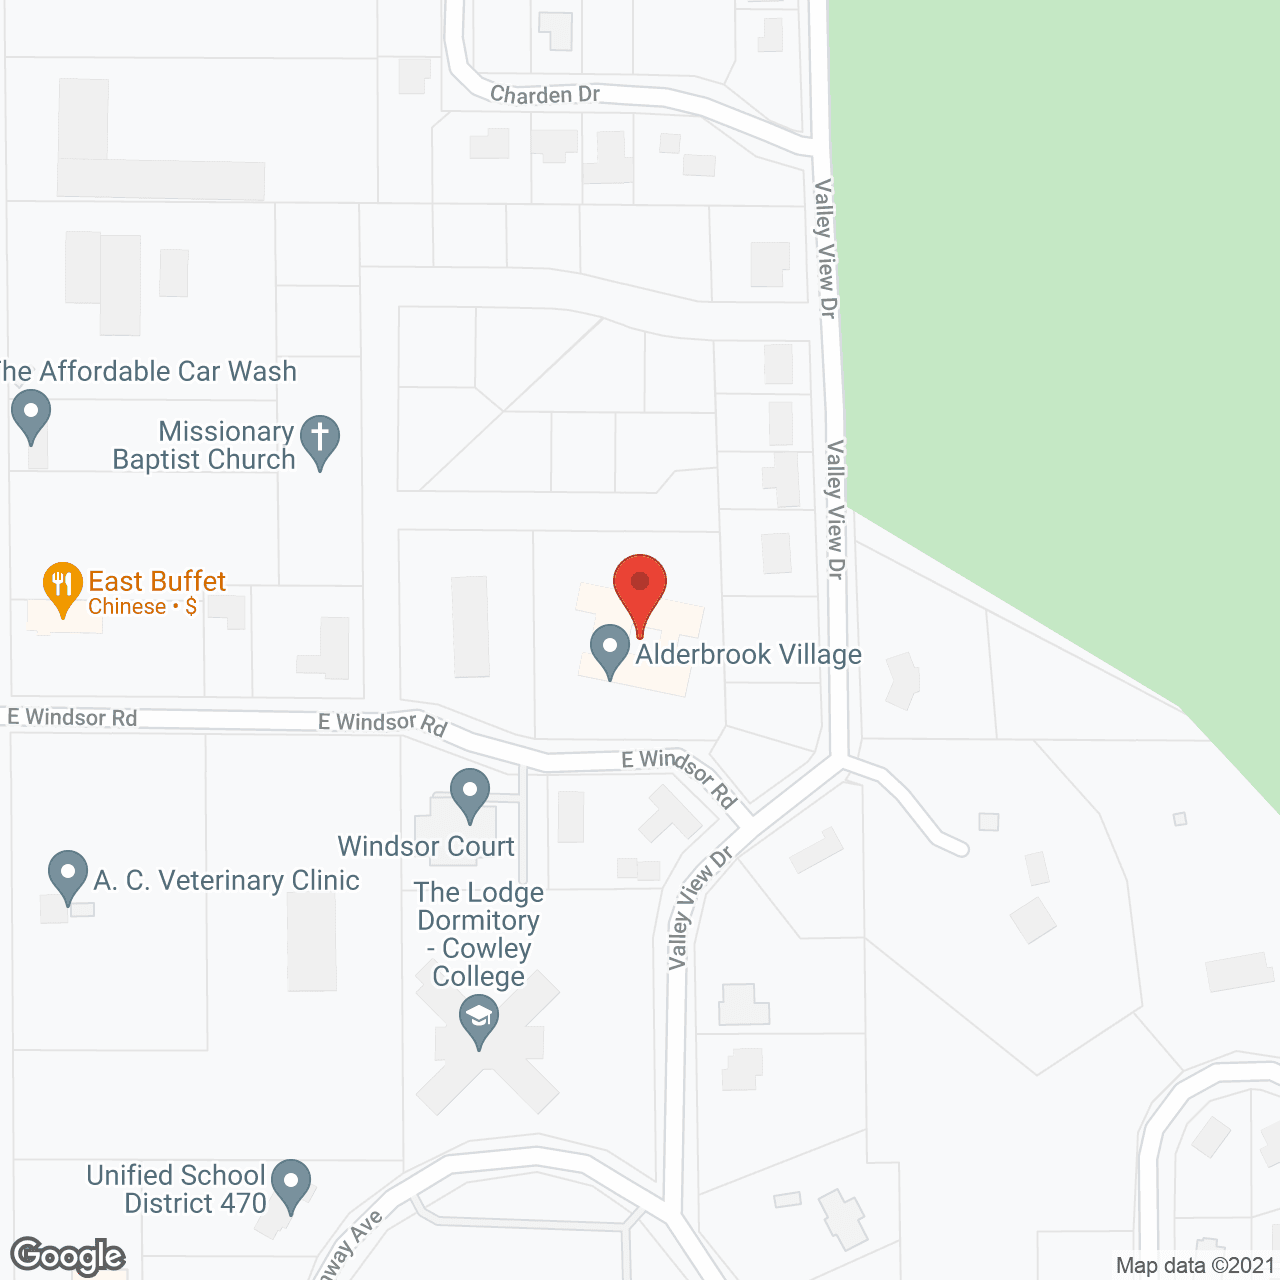 Alderbrook Village in google map